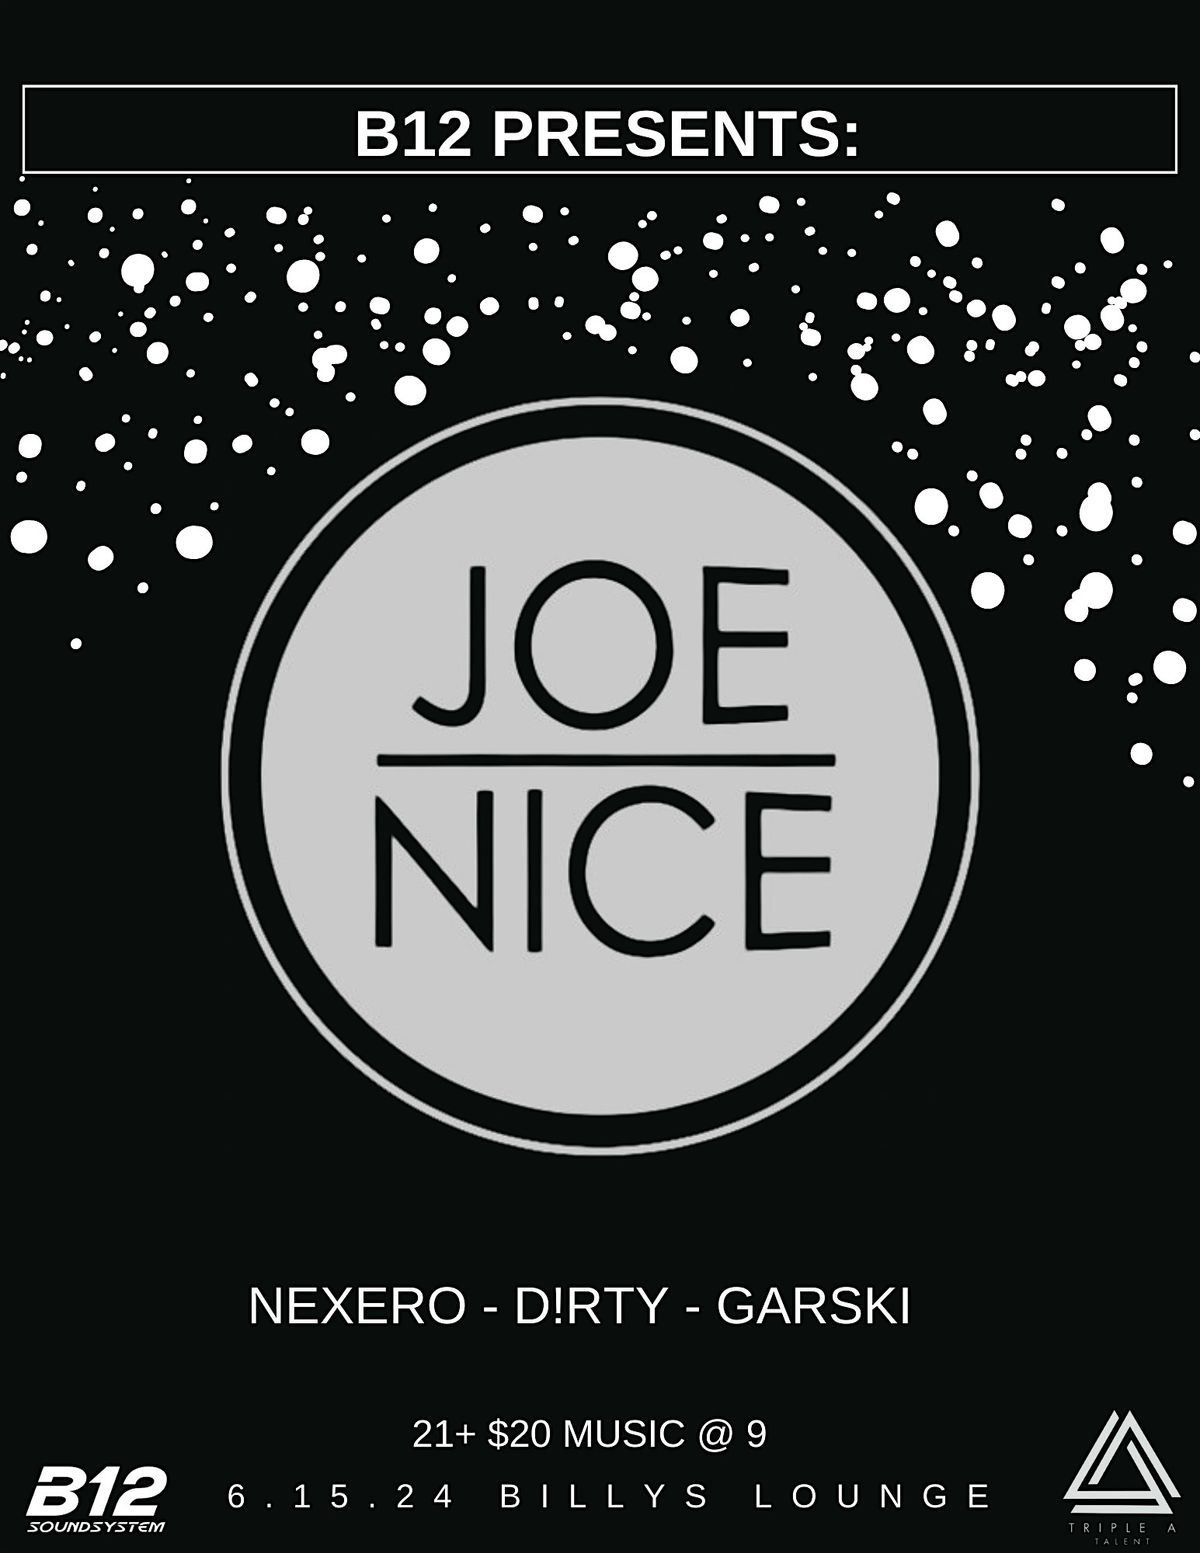 B12 Presents: Joe Nice